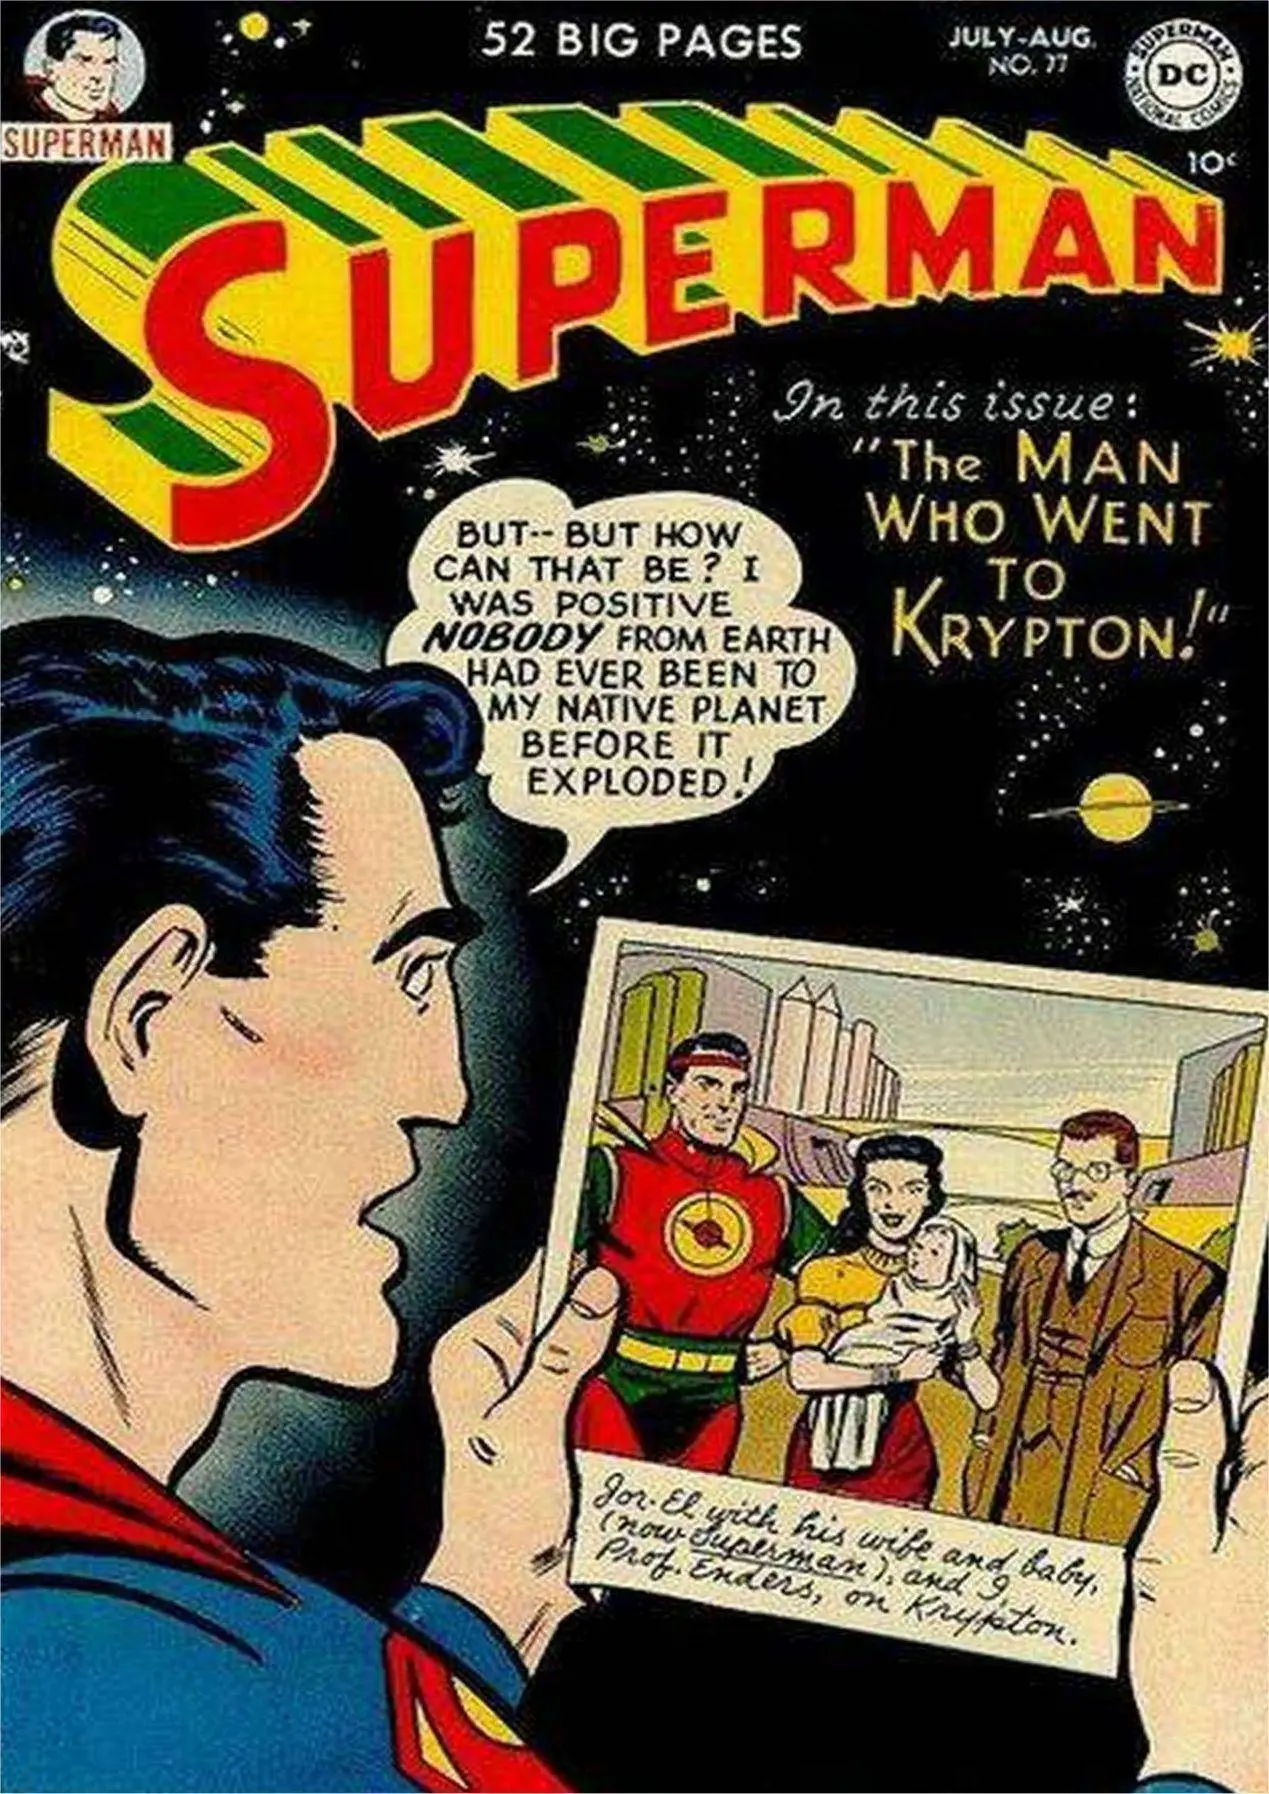 Superman 1939-1955 [97 of 121] [1952-08] Superman 077 ctc cbz